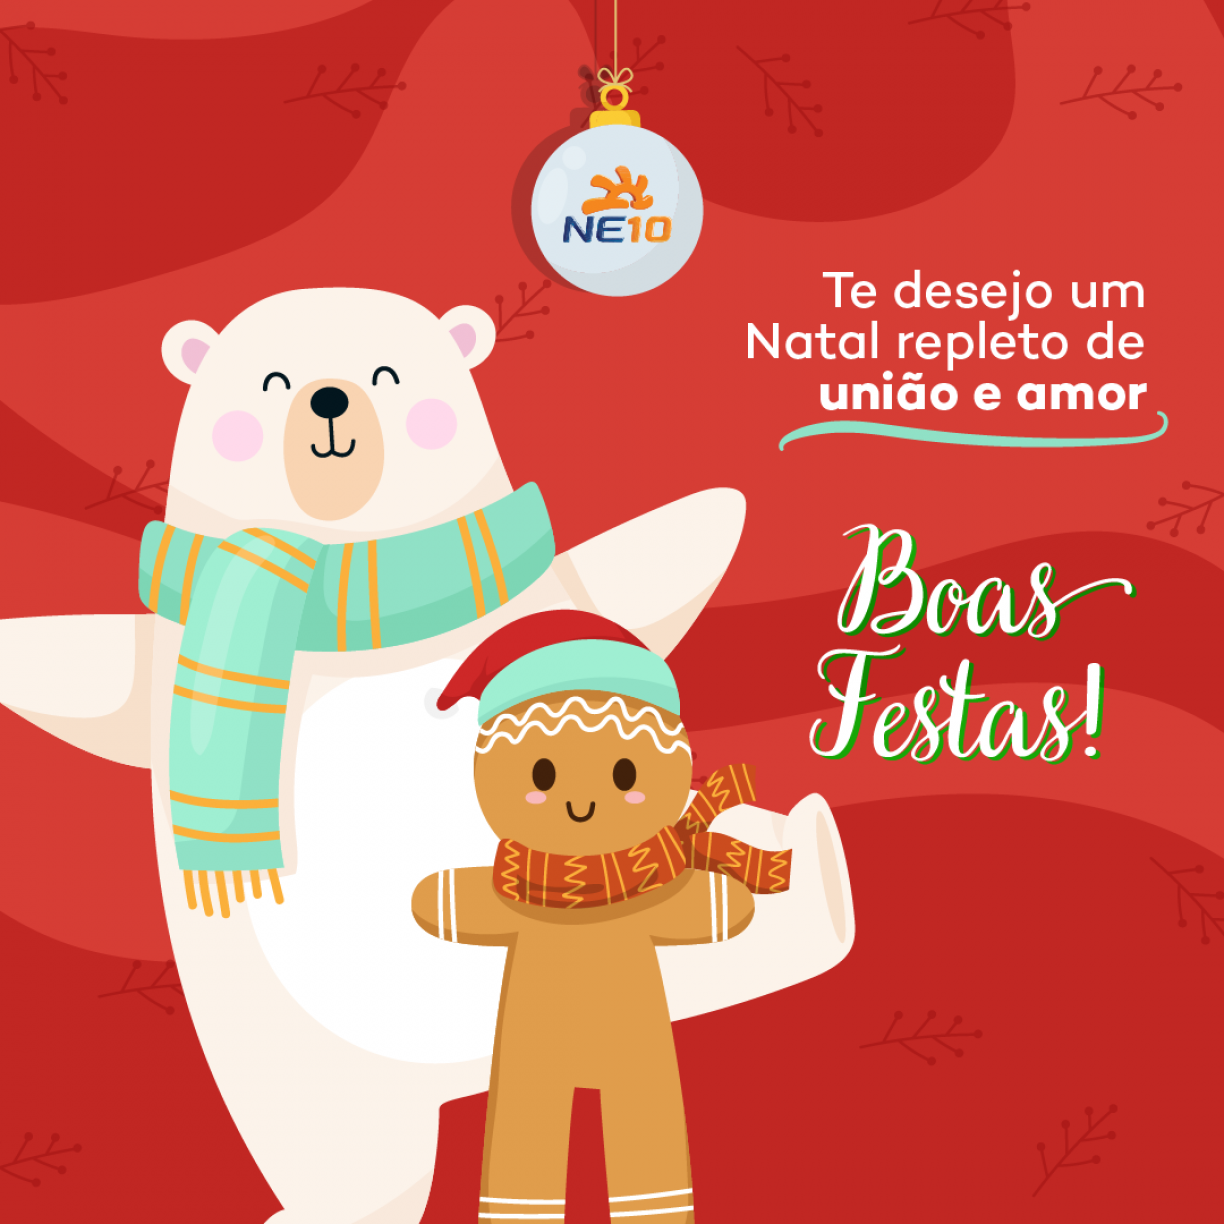 Feliz Natal e Próspero 2023 - Food Safety Brazil